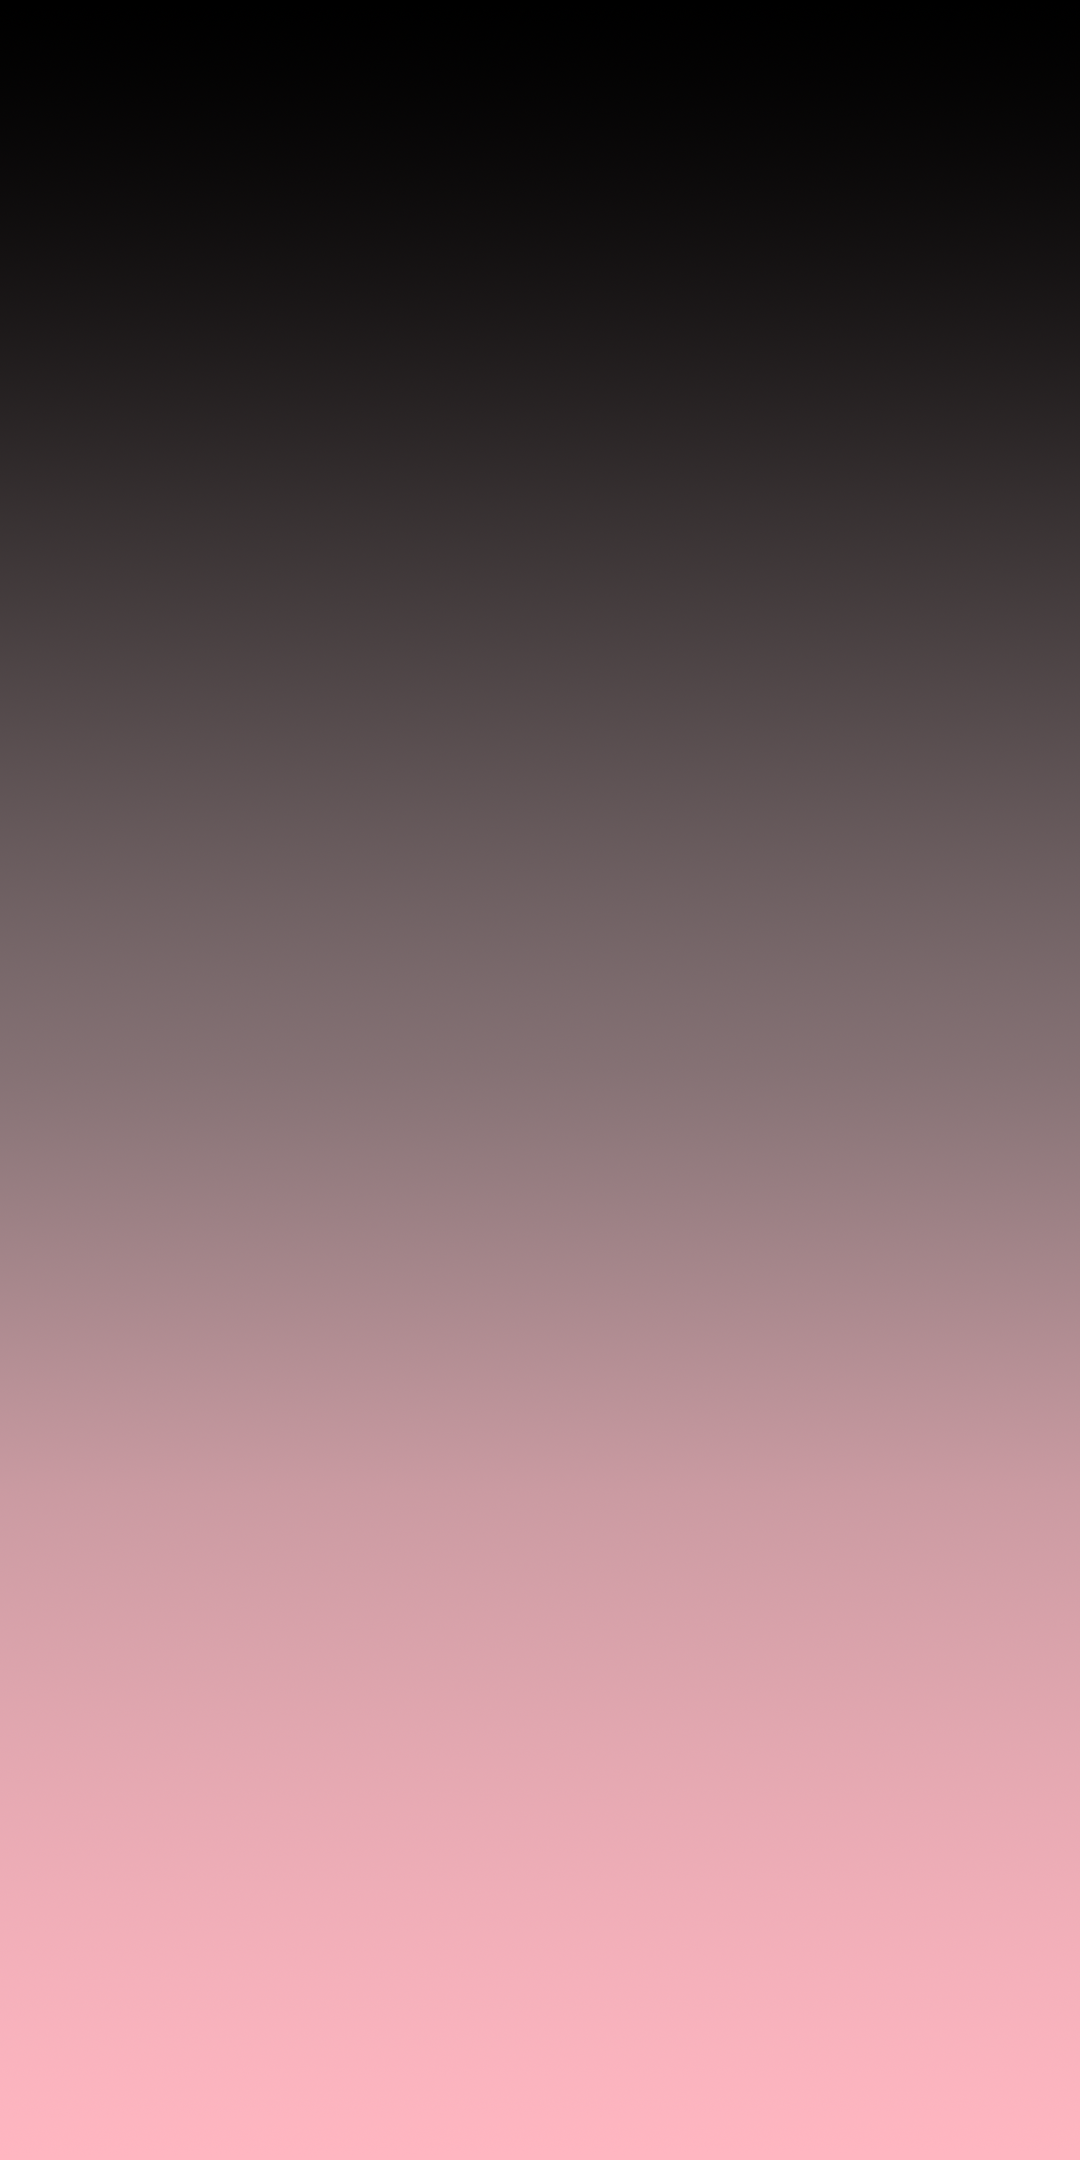 General 1080x2160 Color Burst gradient minimalism portrait display simple background